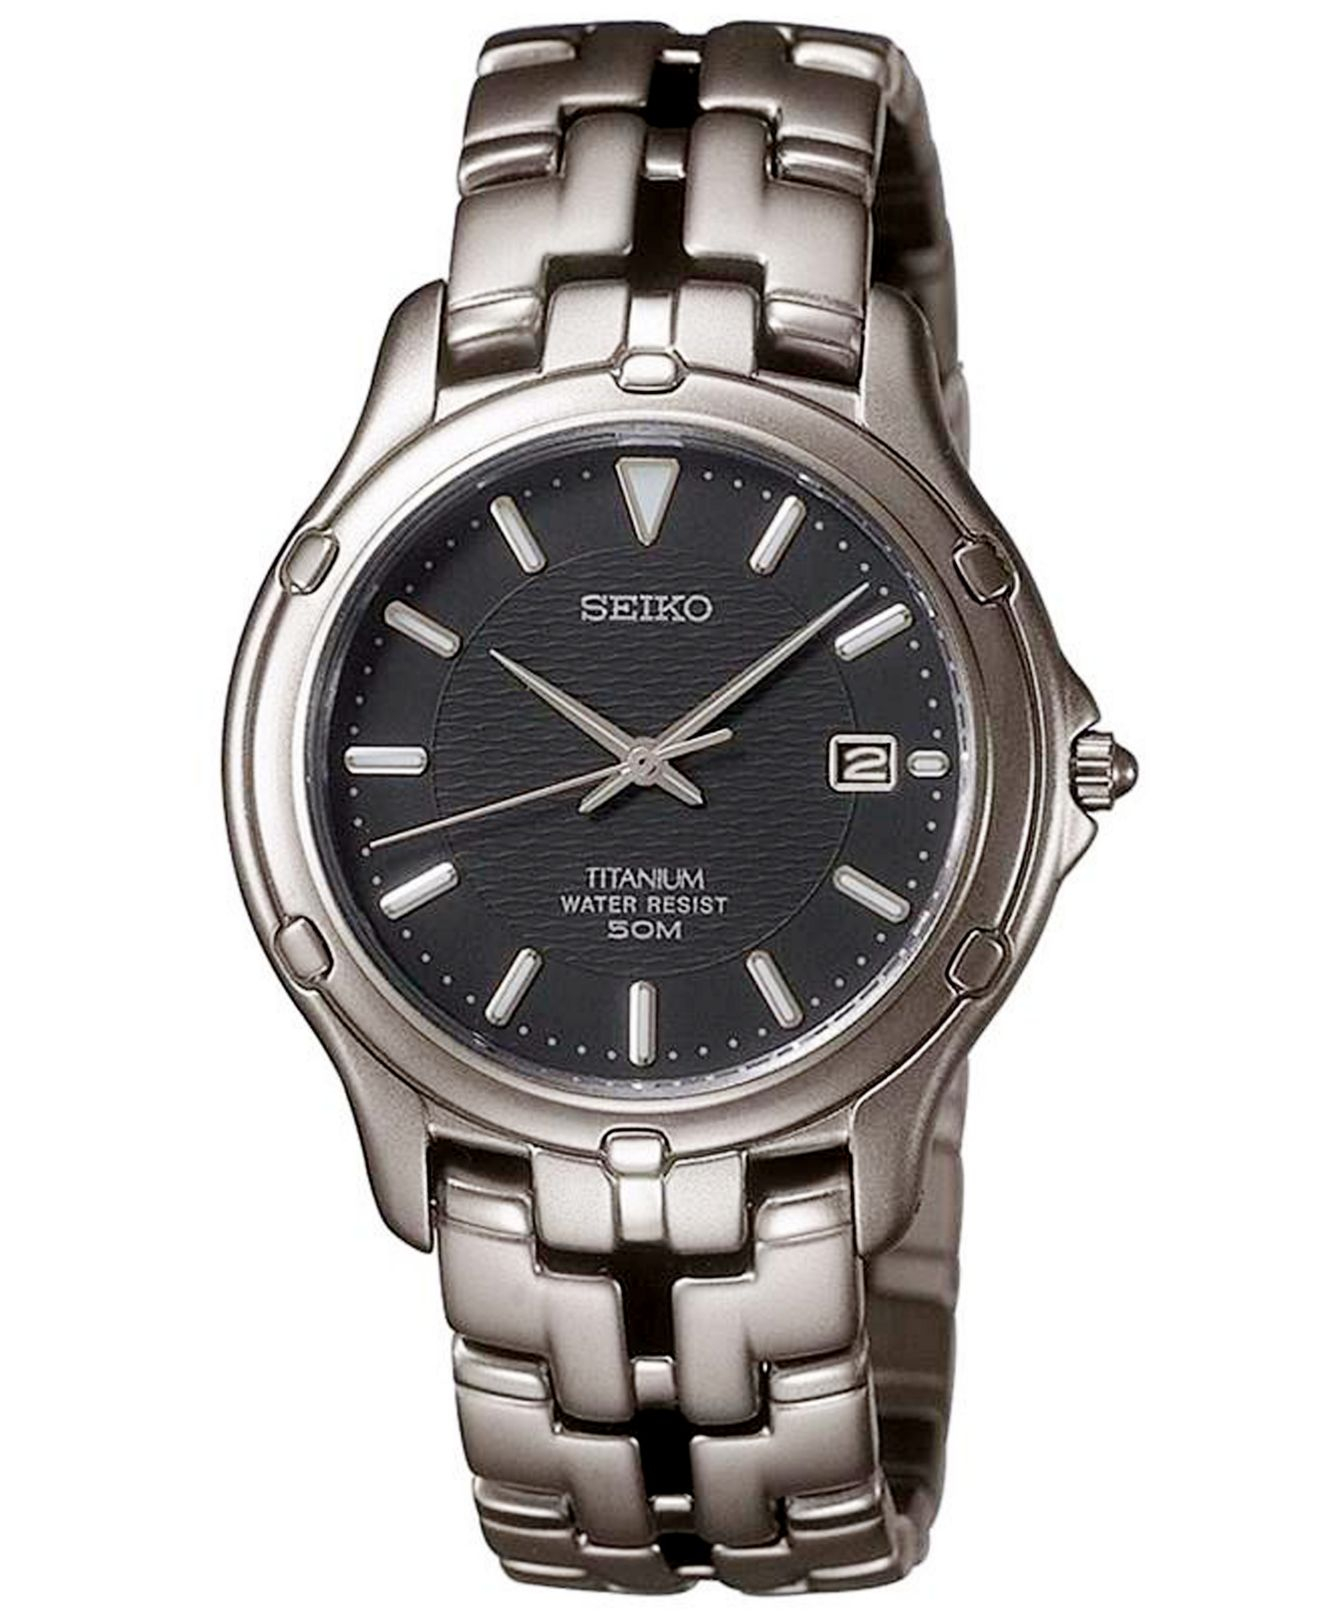 Seiko Men'S Grand Sport Watch Titanium Bracelet Slc033 in Metallic for Men